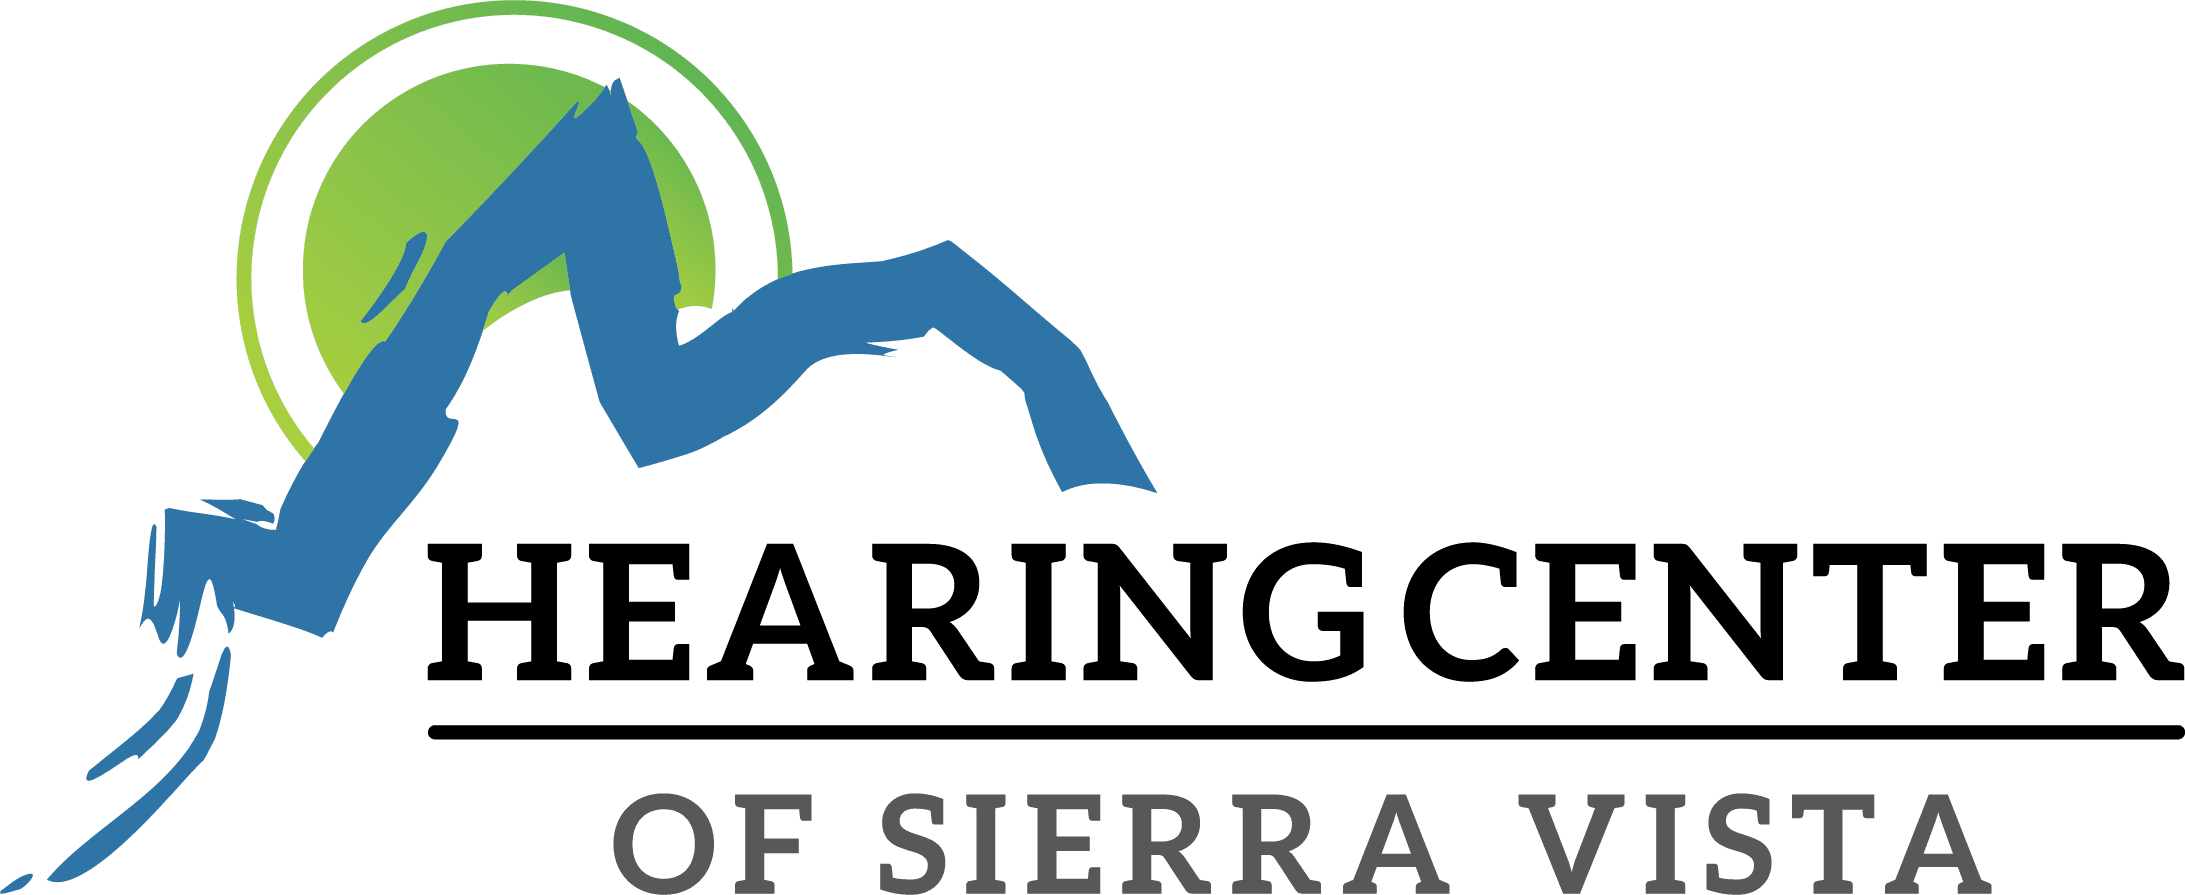 Hearing Center Of Sierra Vista